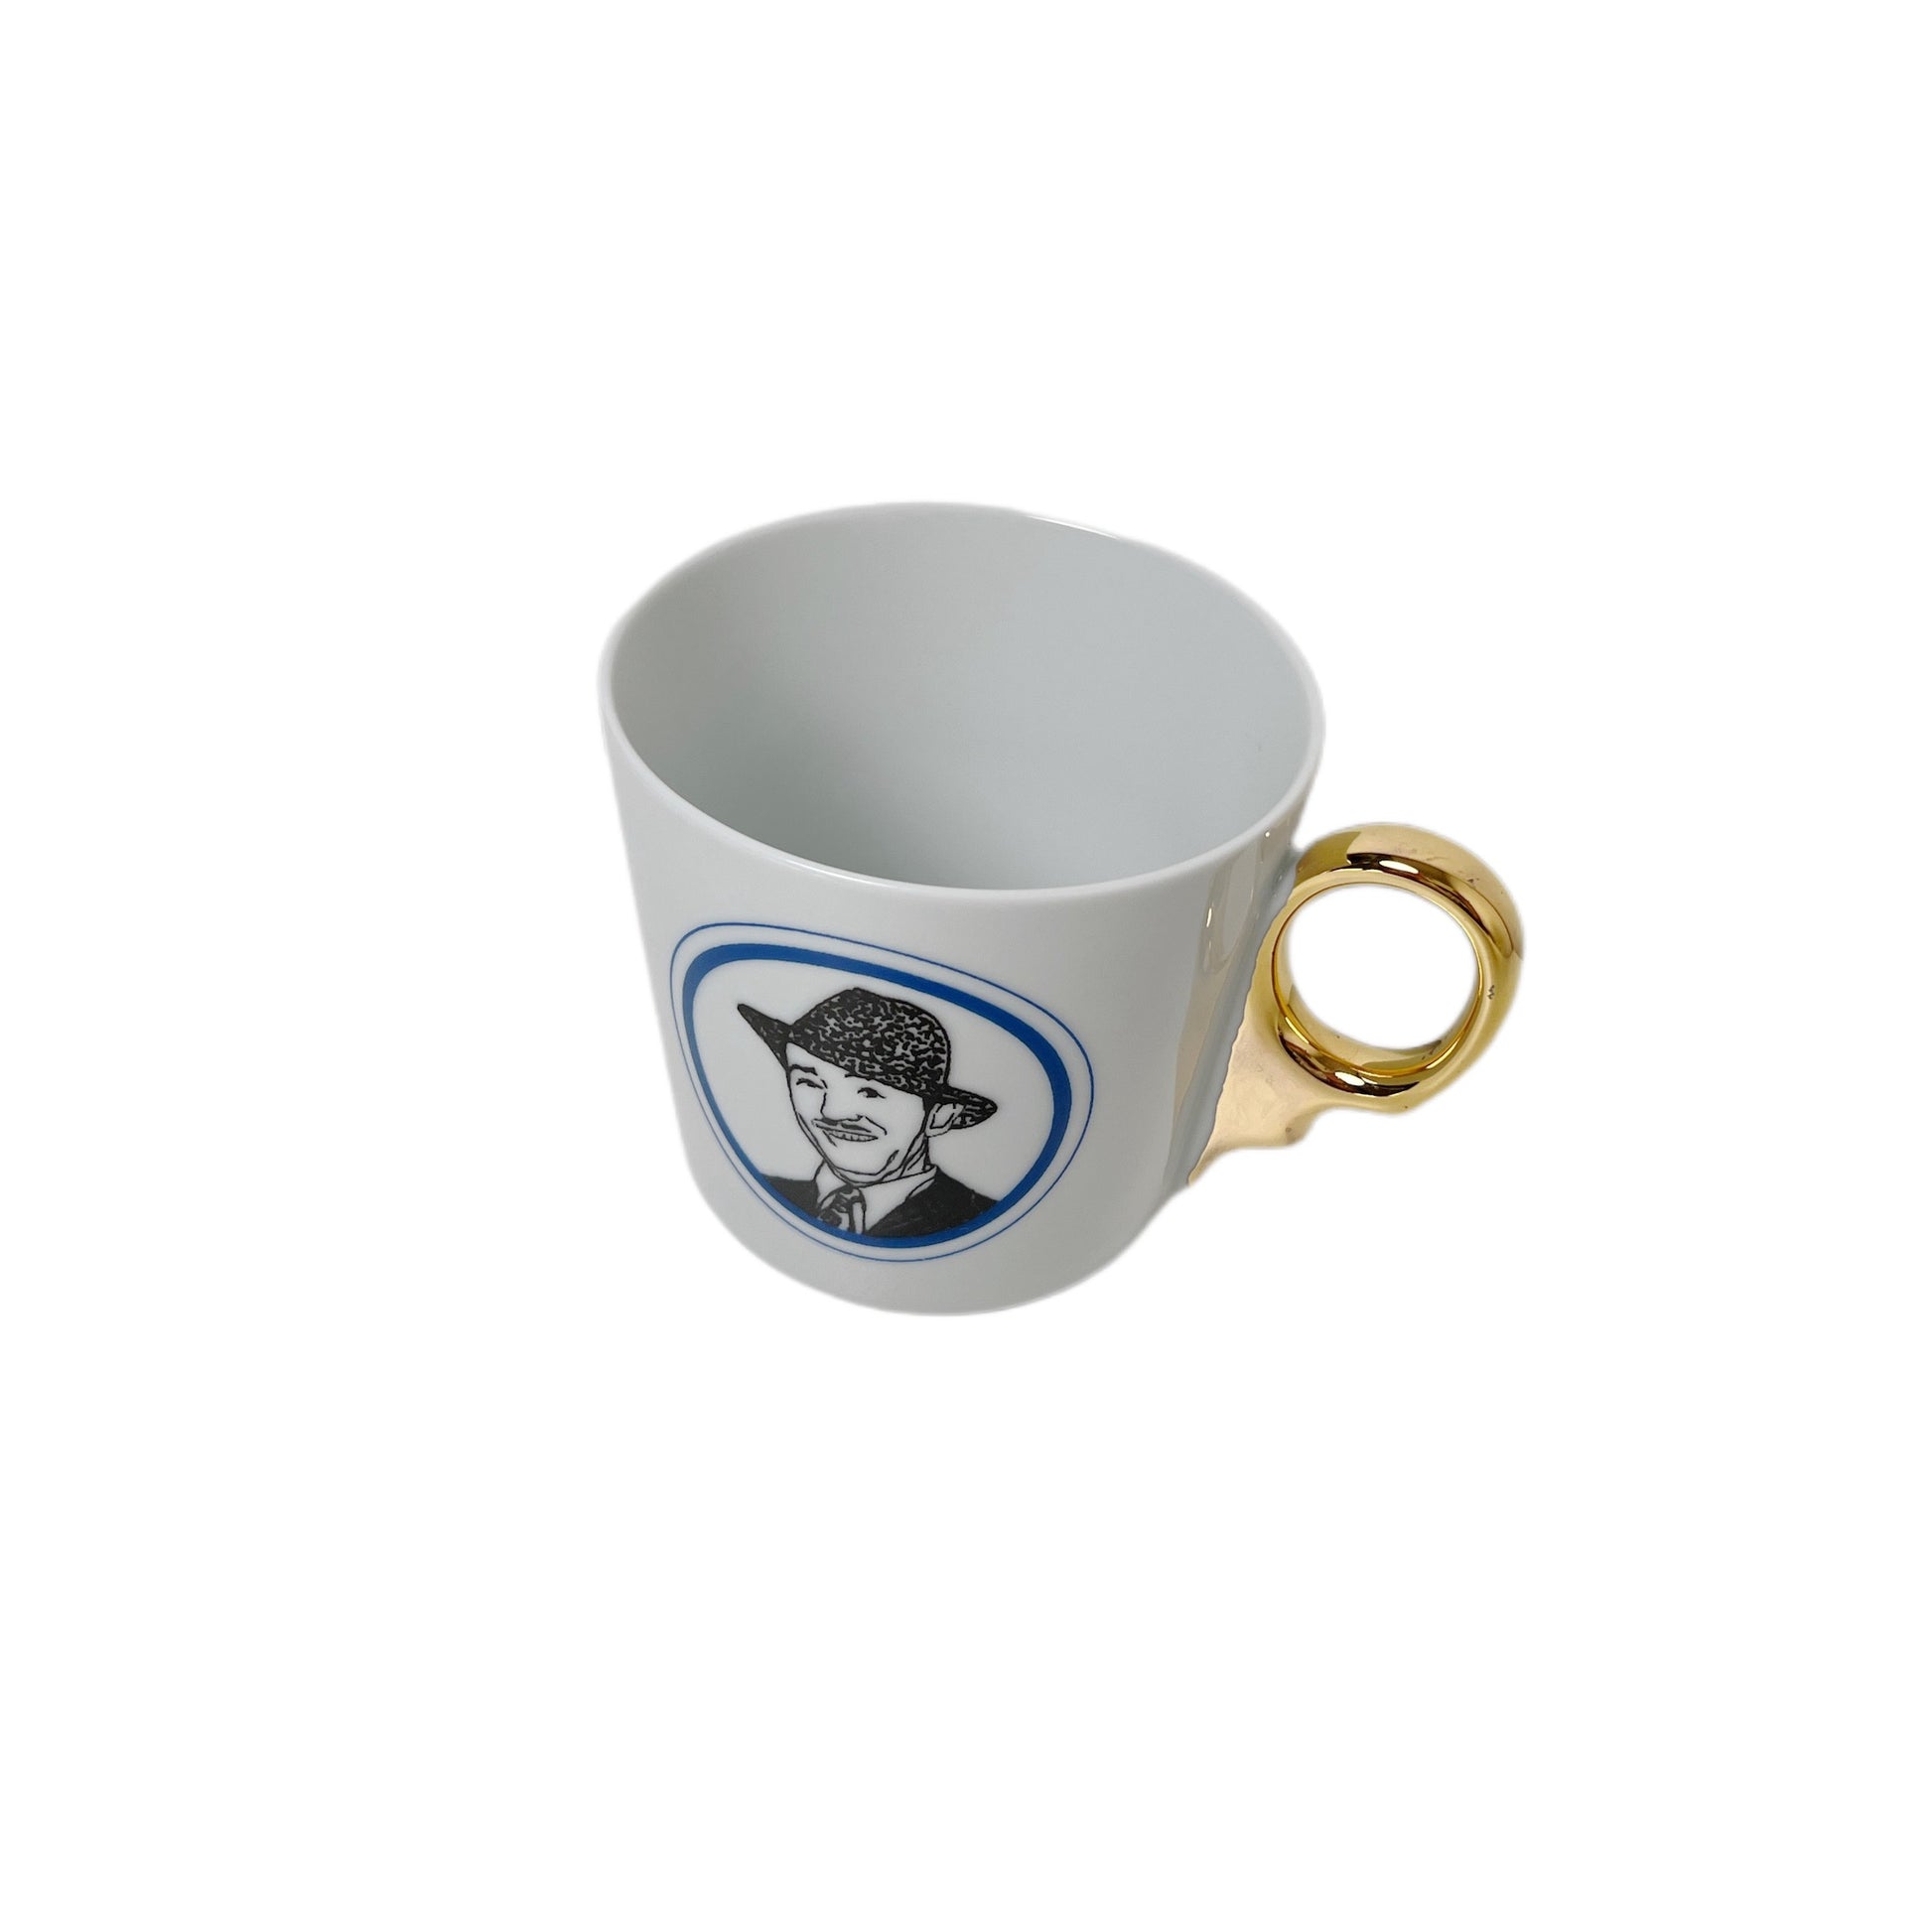 【Kuhn Keramik】 ポートレートマグカップ Walt Disney